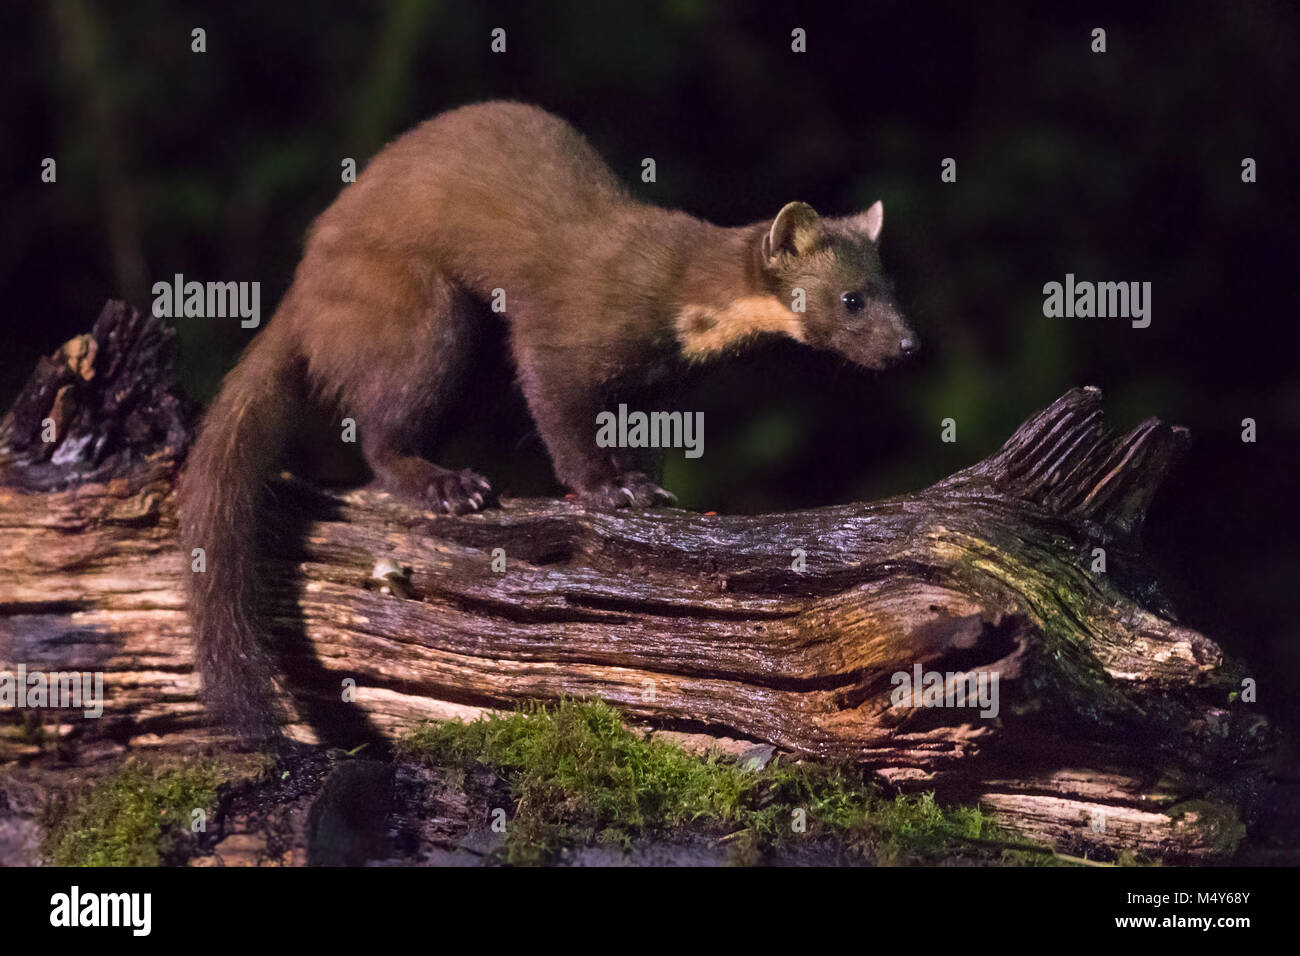 European pine marten (Martes martes) nocturnal predator perched on log at night. Stock Photo